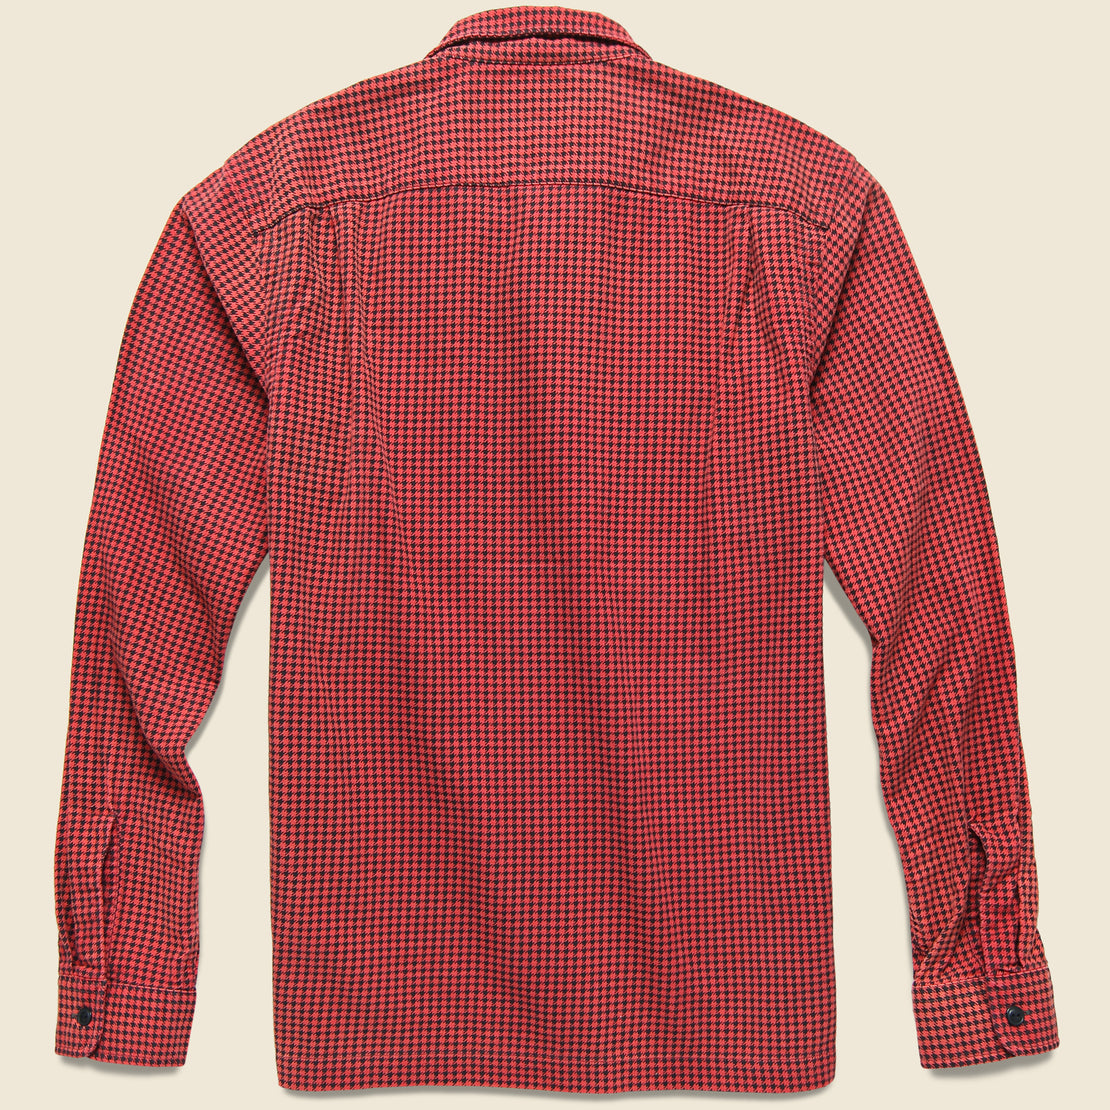 Monterey Houndstooth Check Camp Shirt - Red/Sulphur Black